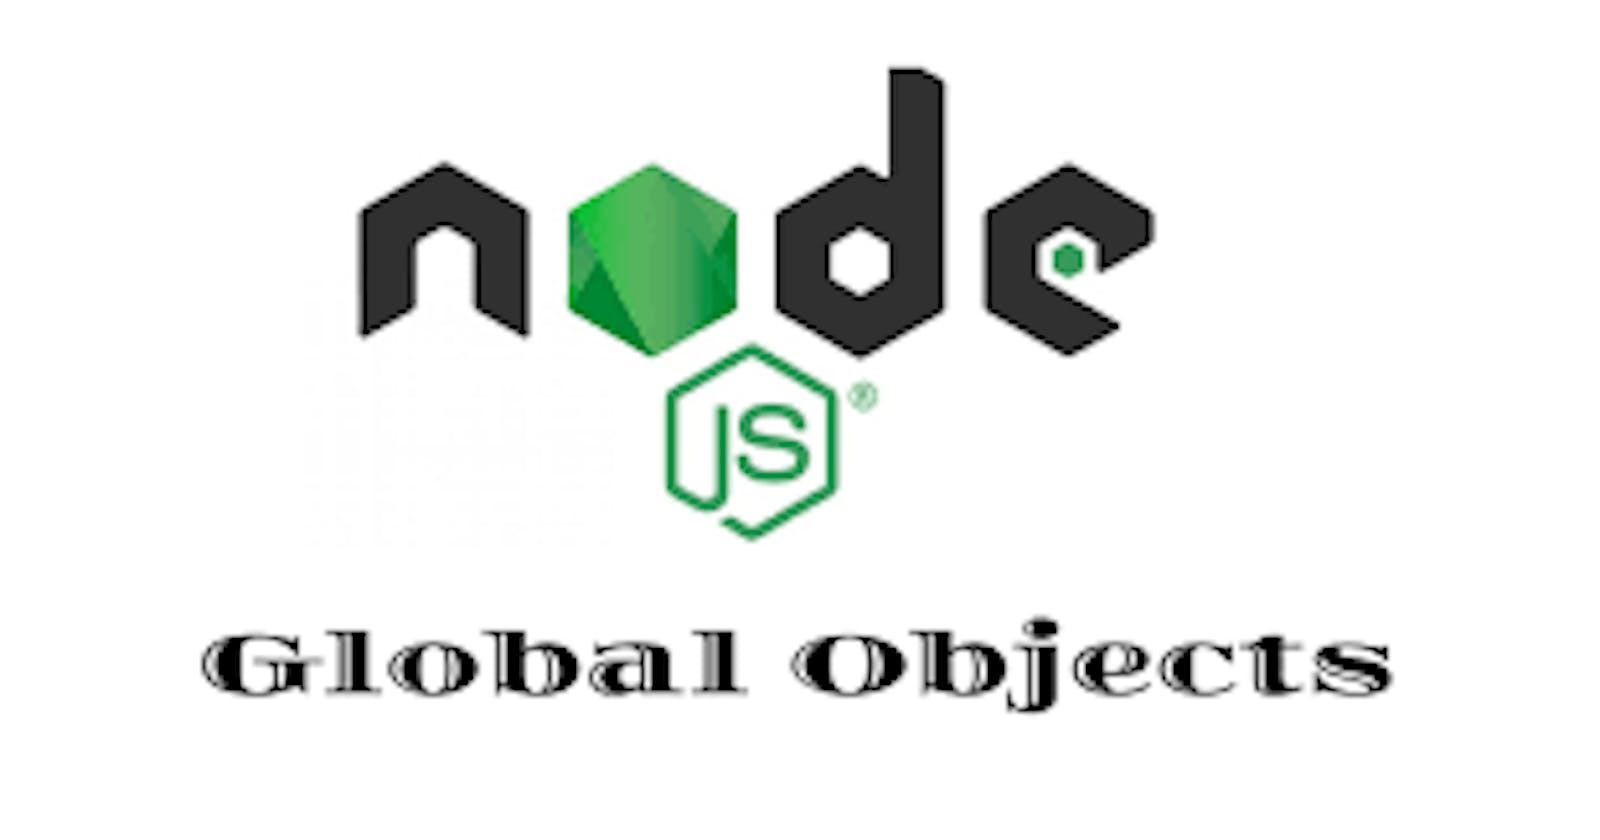 Node Global Objects